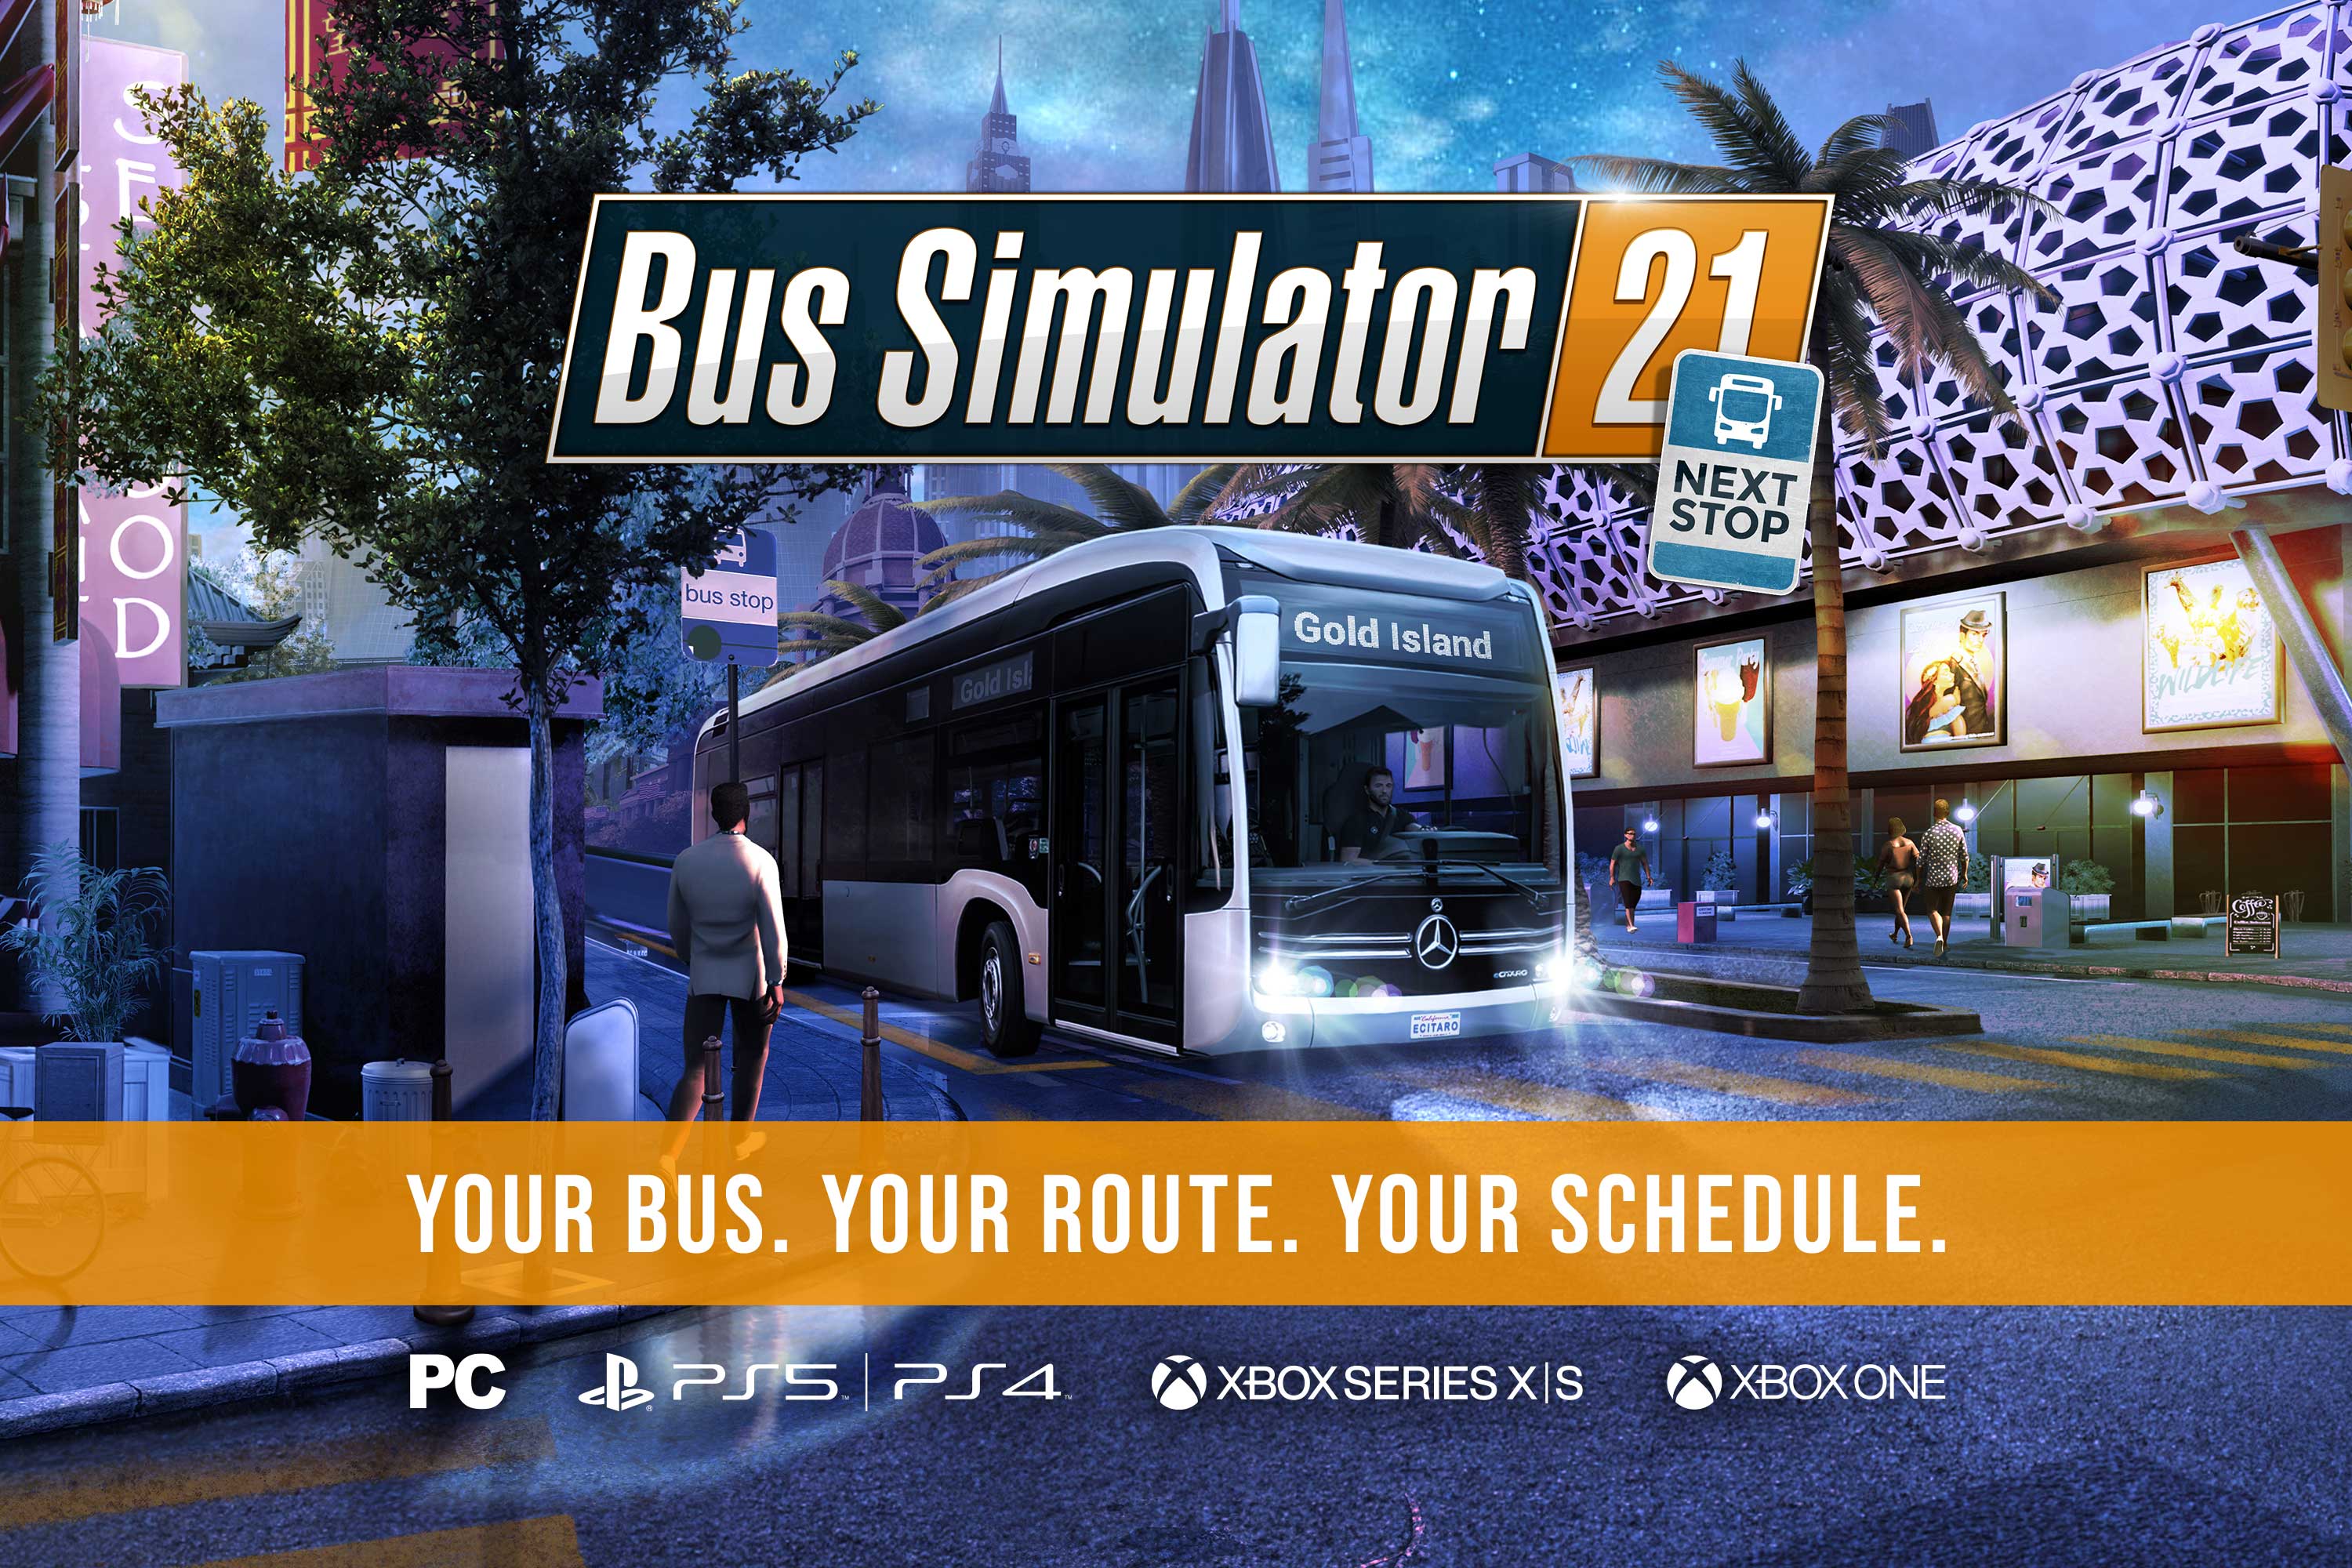 bus simulator 18 pc license key download